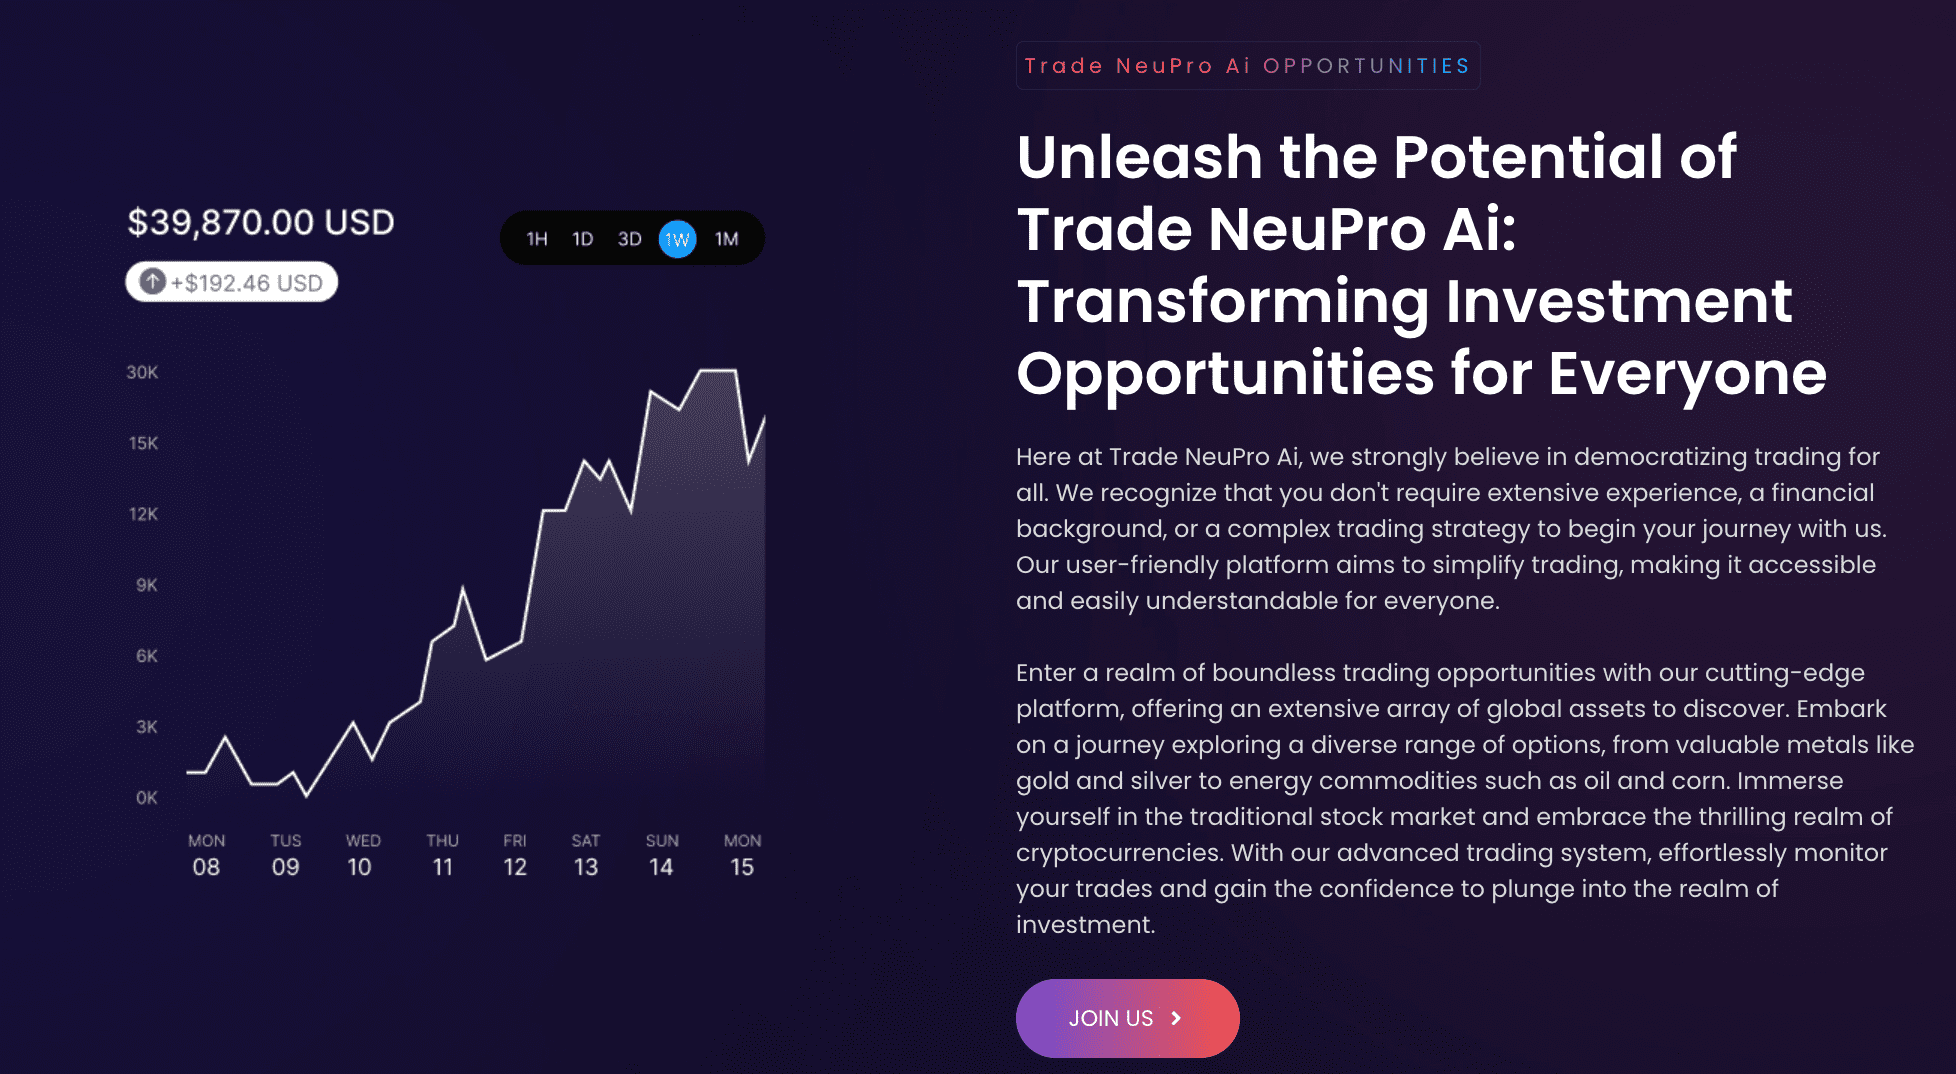 Trade 1.1 NeuPro (i1) opportunities